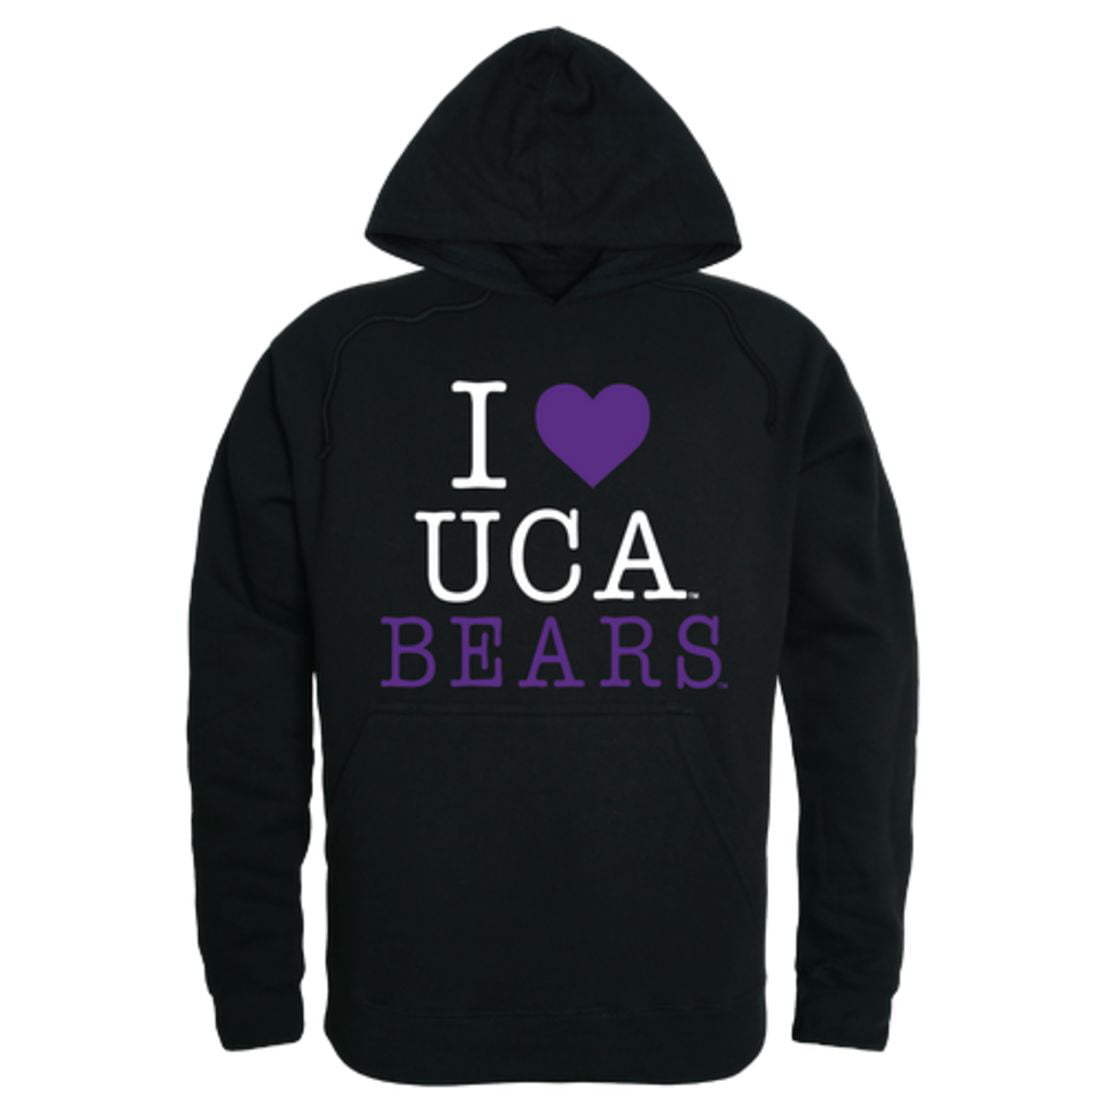 I Love UCA University of Central Arkansas Bears Hoodie Sweatshirt Black Small